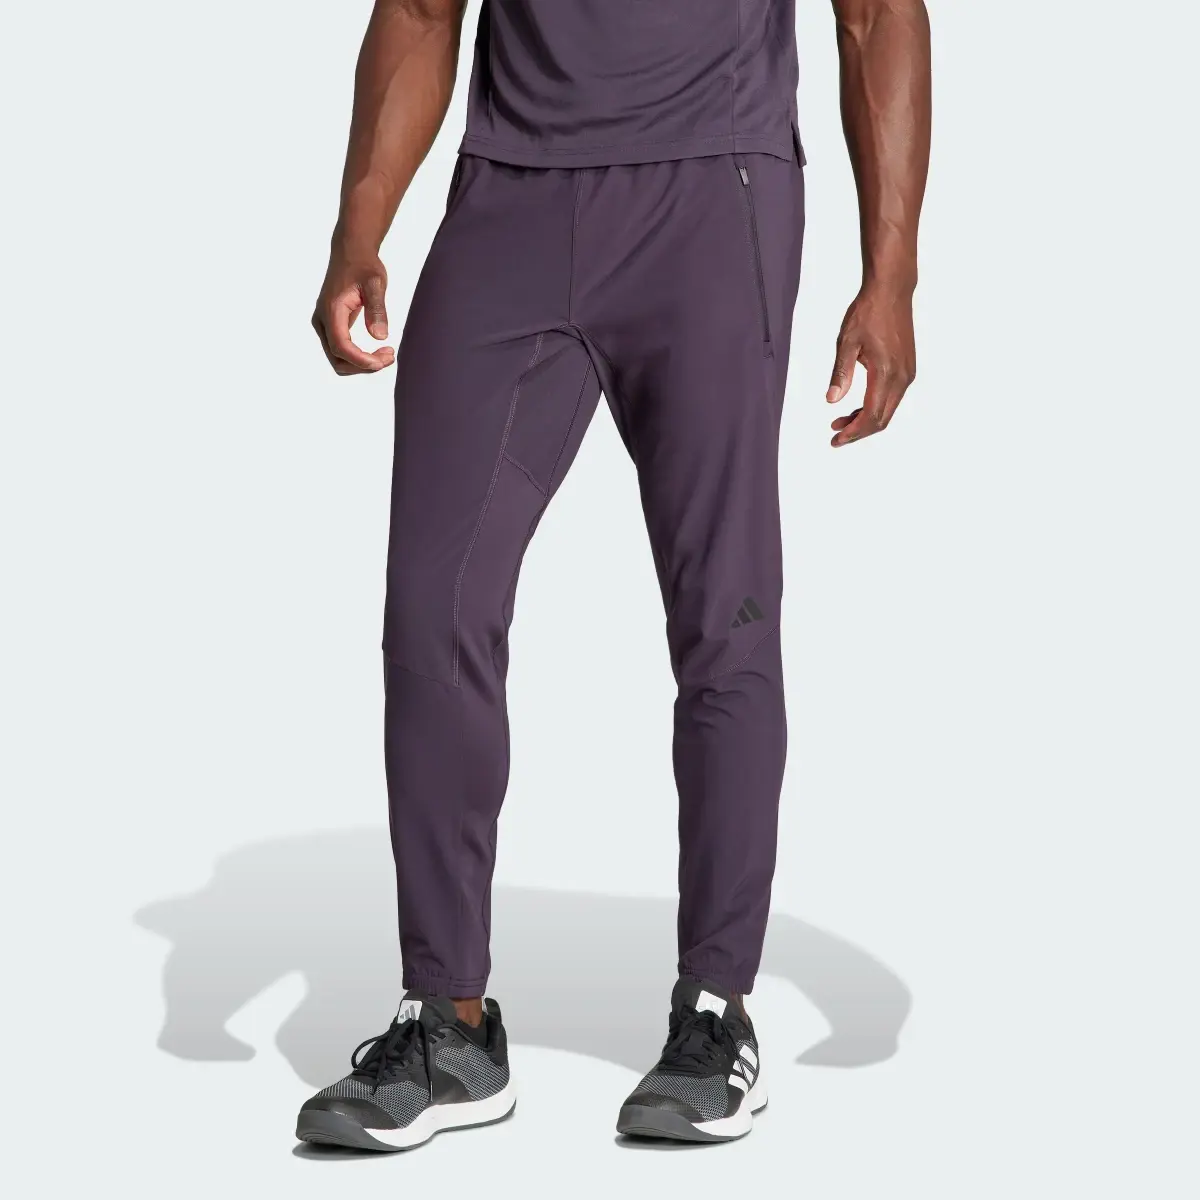 Adidas Spodnie Designed for Training Workout. 1